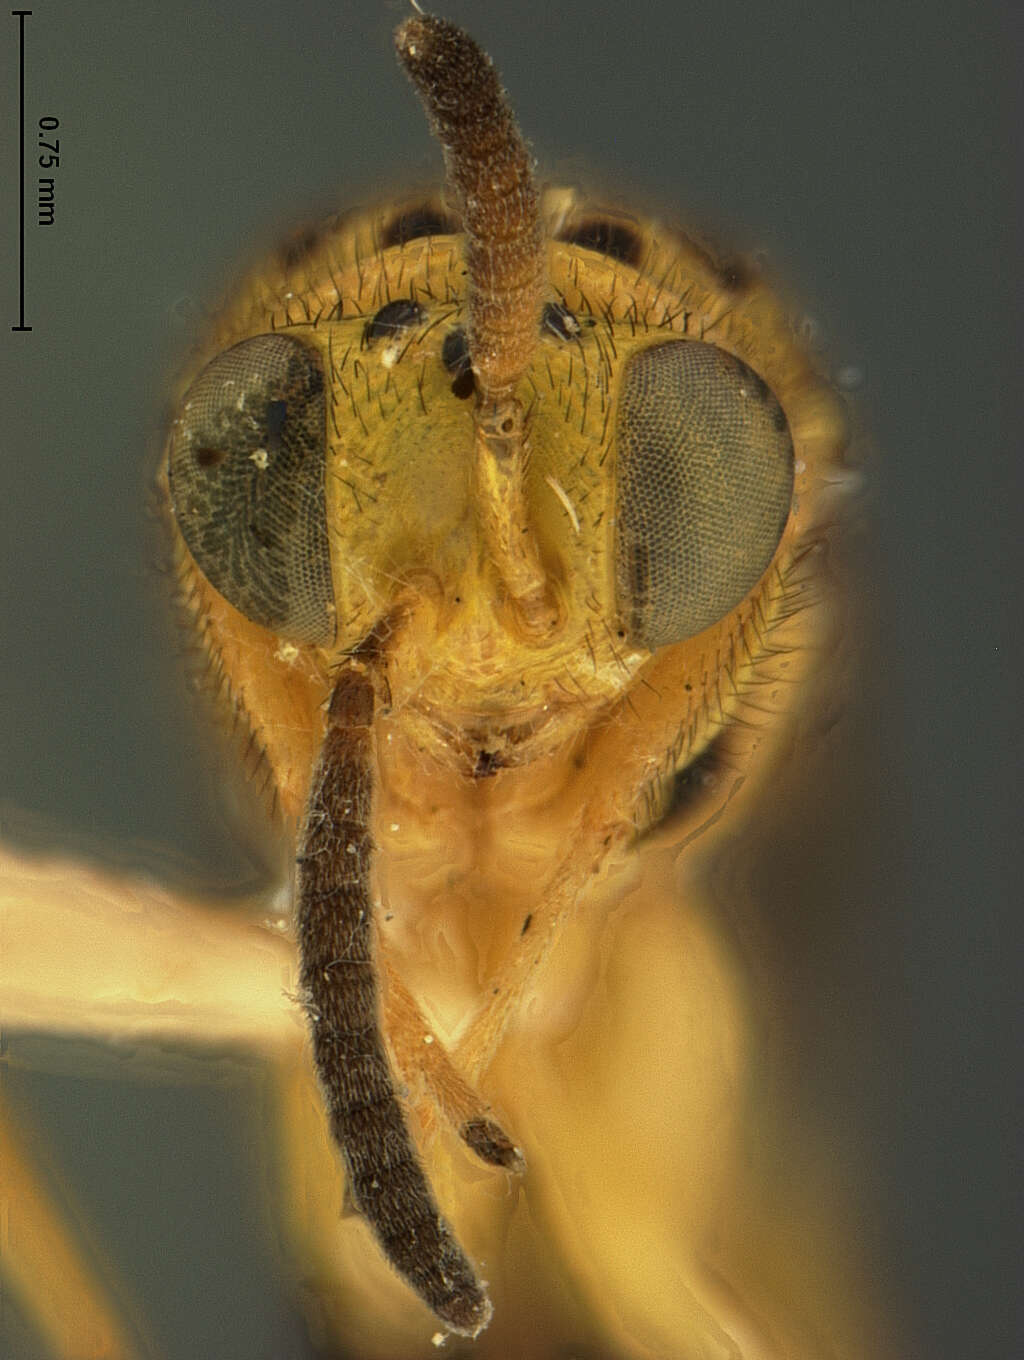 Image of chalcidid wasps